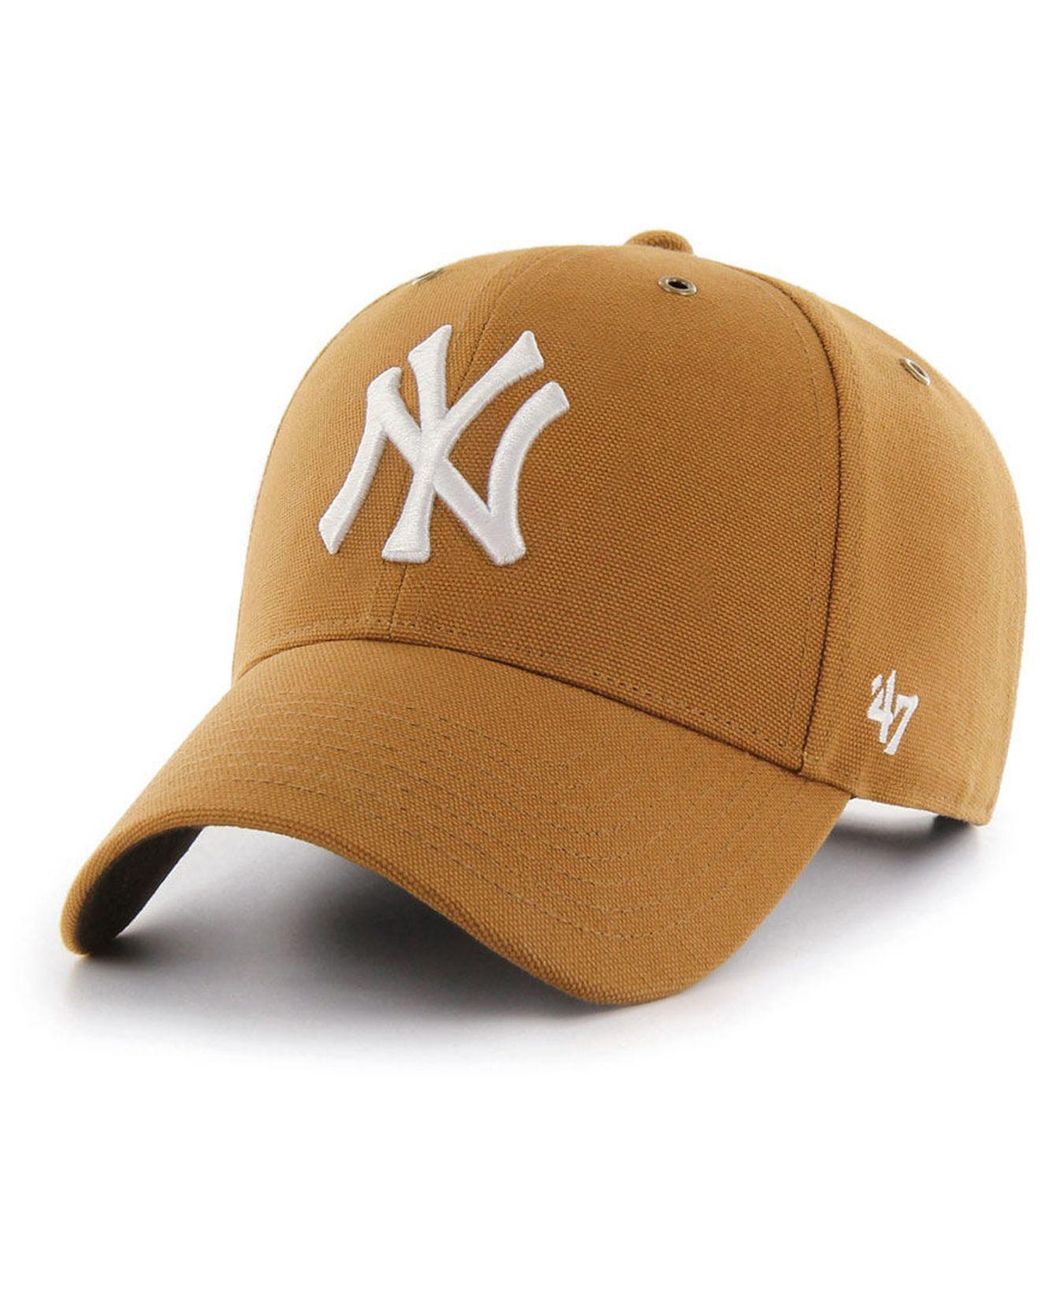 Official New York Yankees Baseball Hats, Yankees Caps, Yankees Hat, Beanies, MLBshop.com